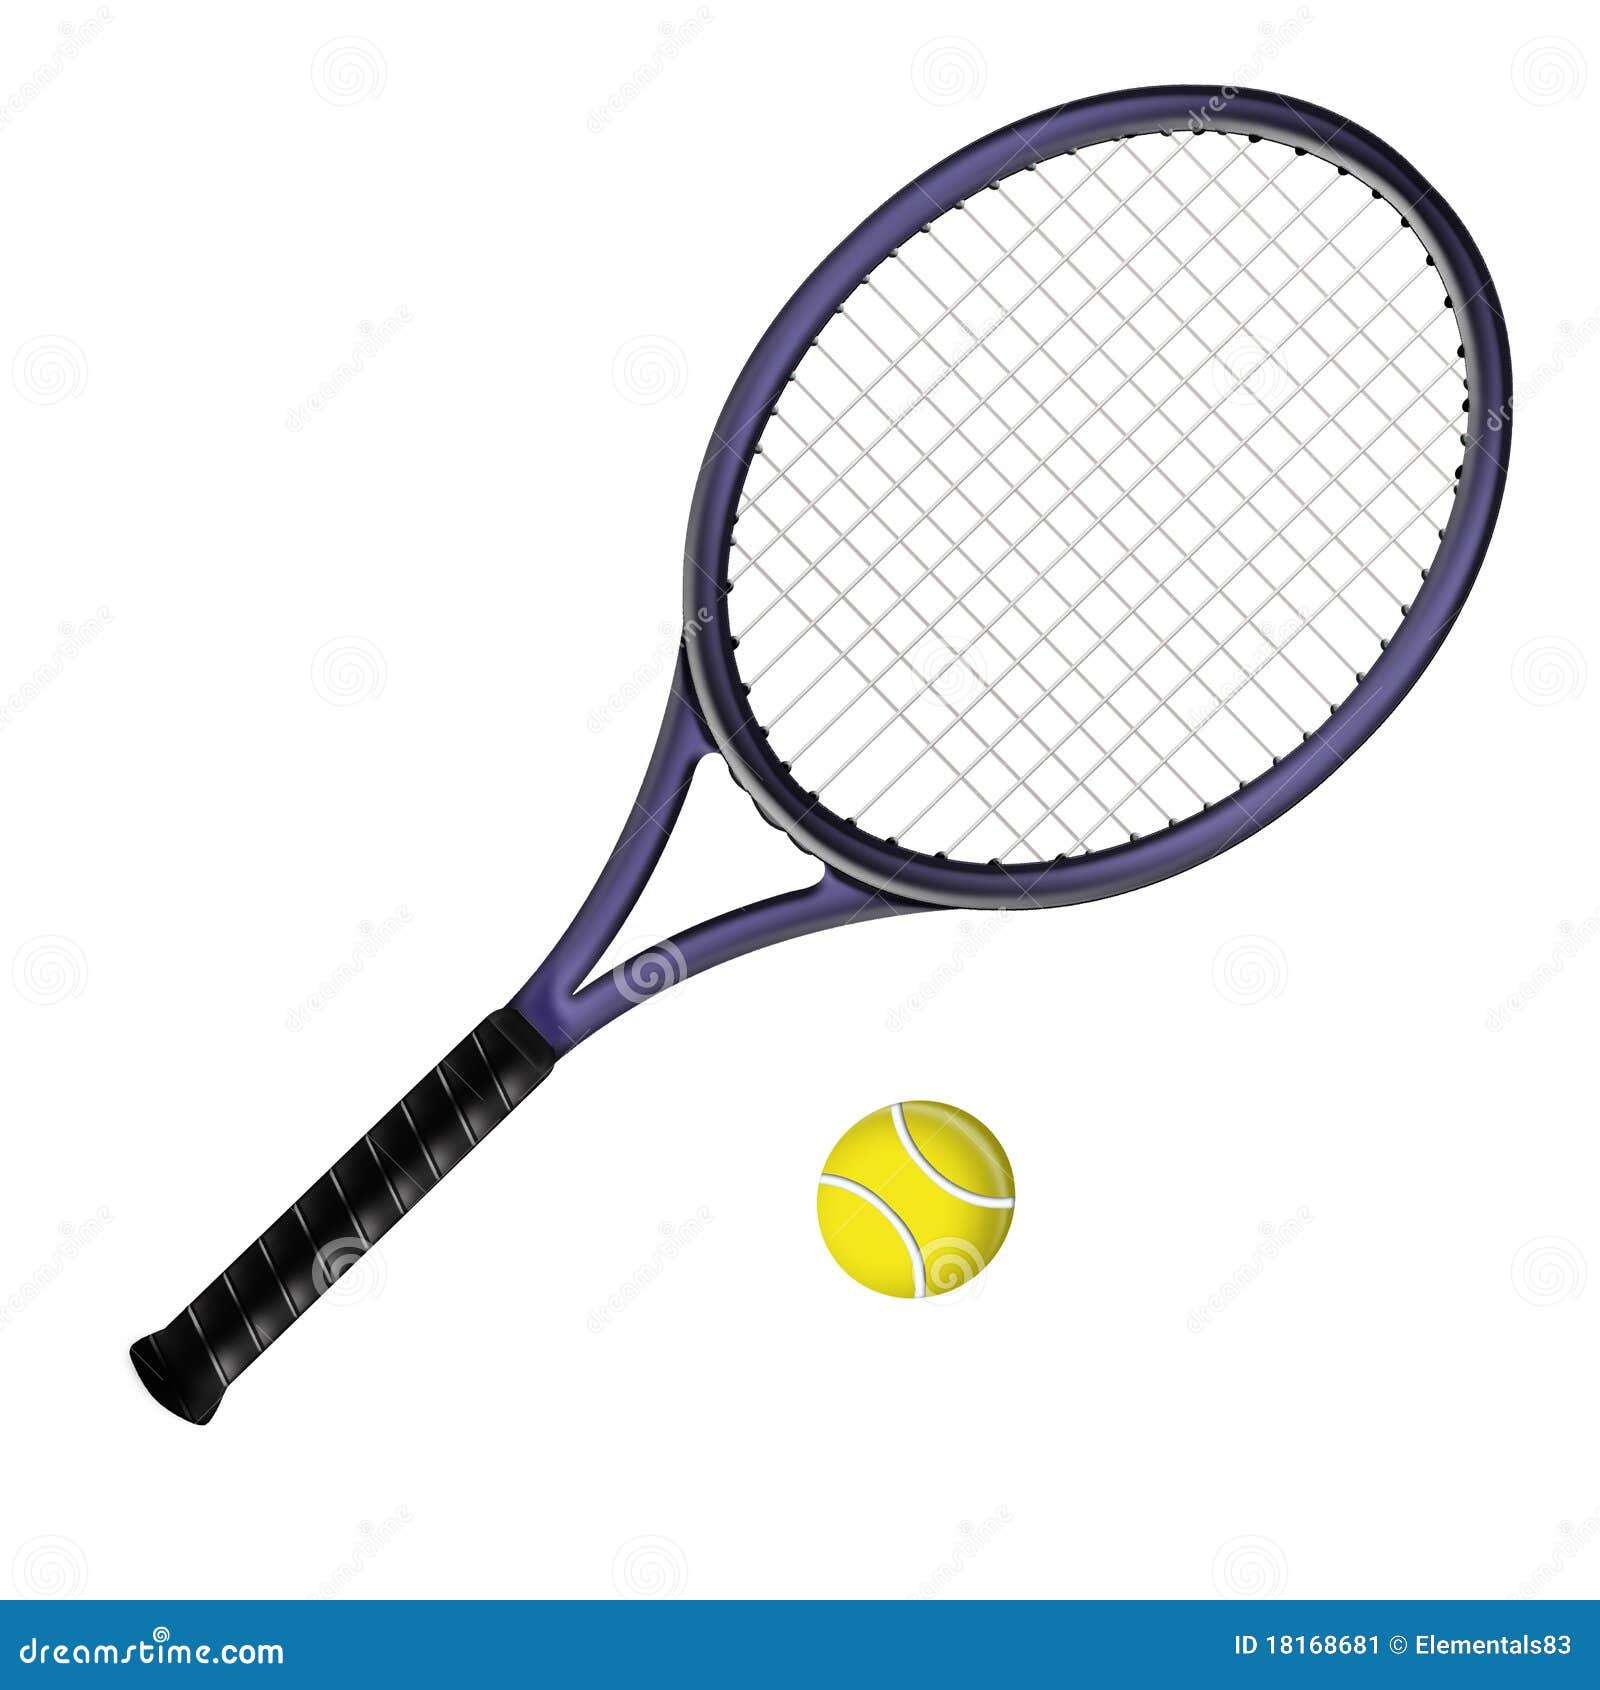 Tennis Racket Stock Image - Image: 18168681
